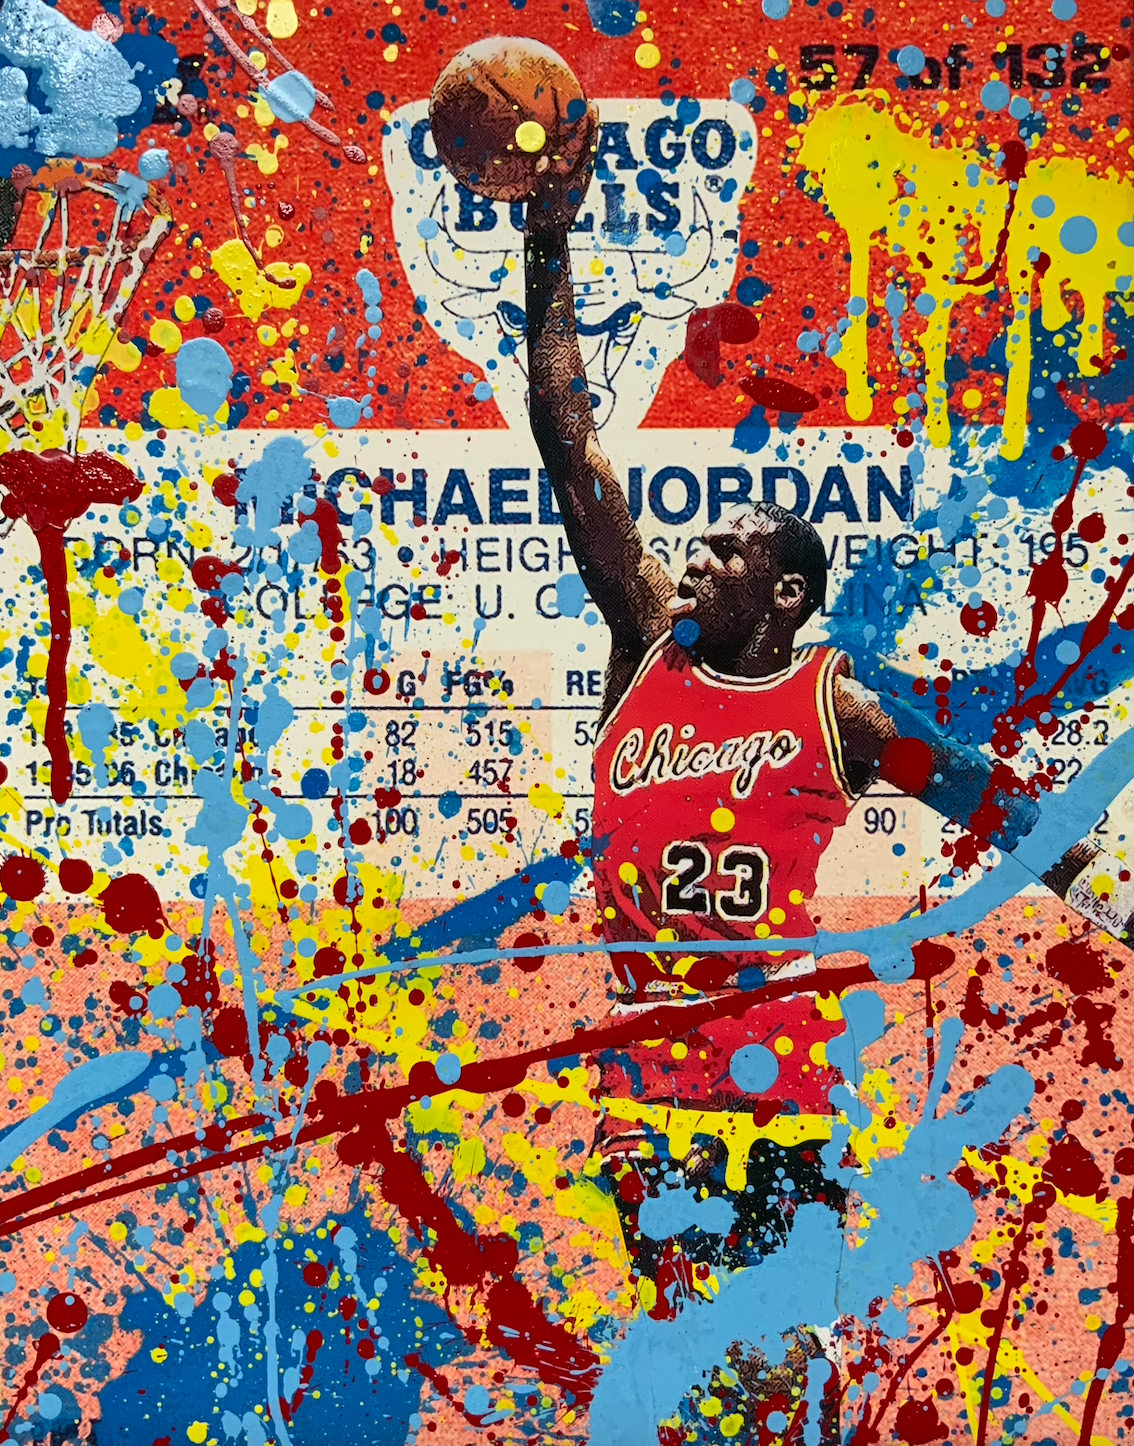 Michael Jordan Rookie Giclee Print